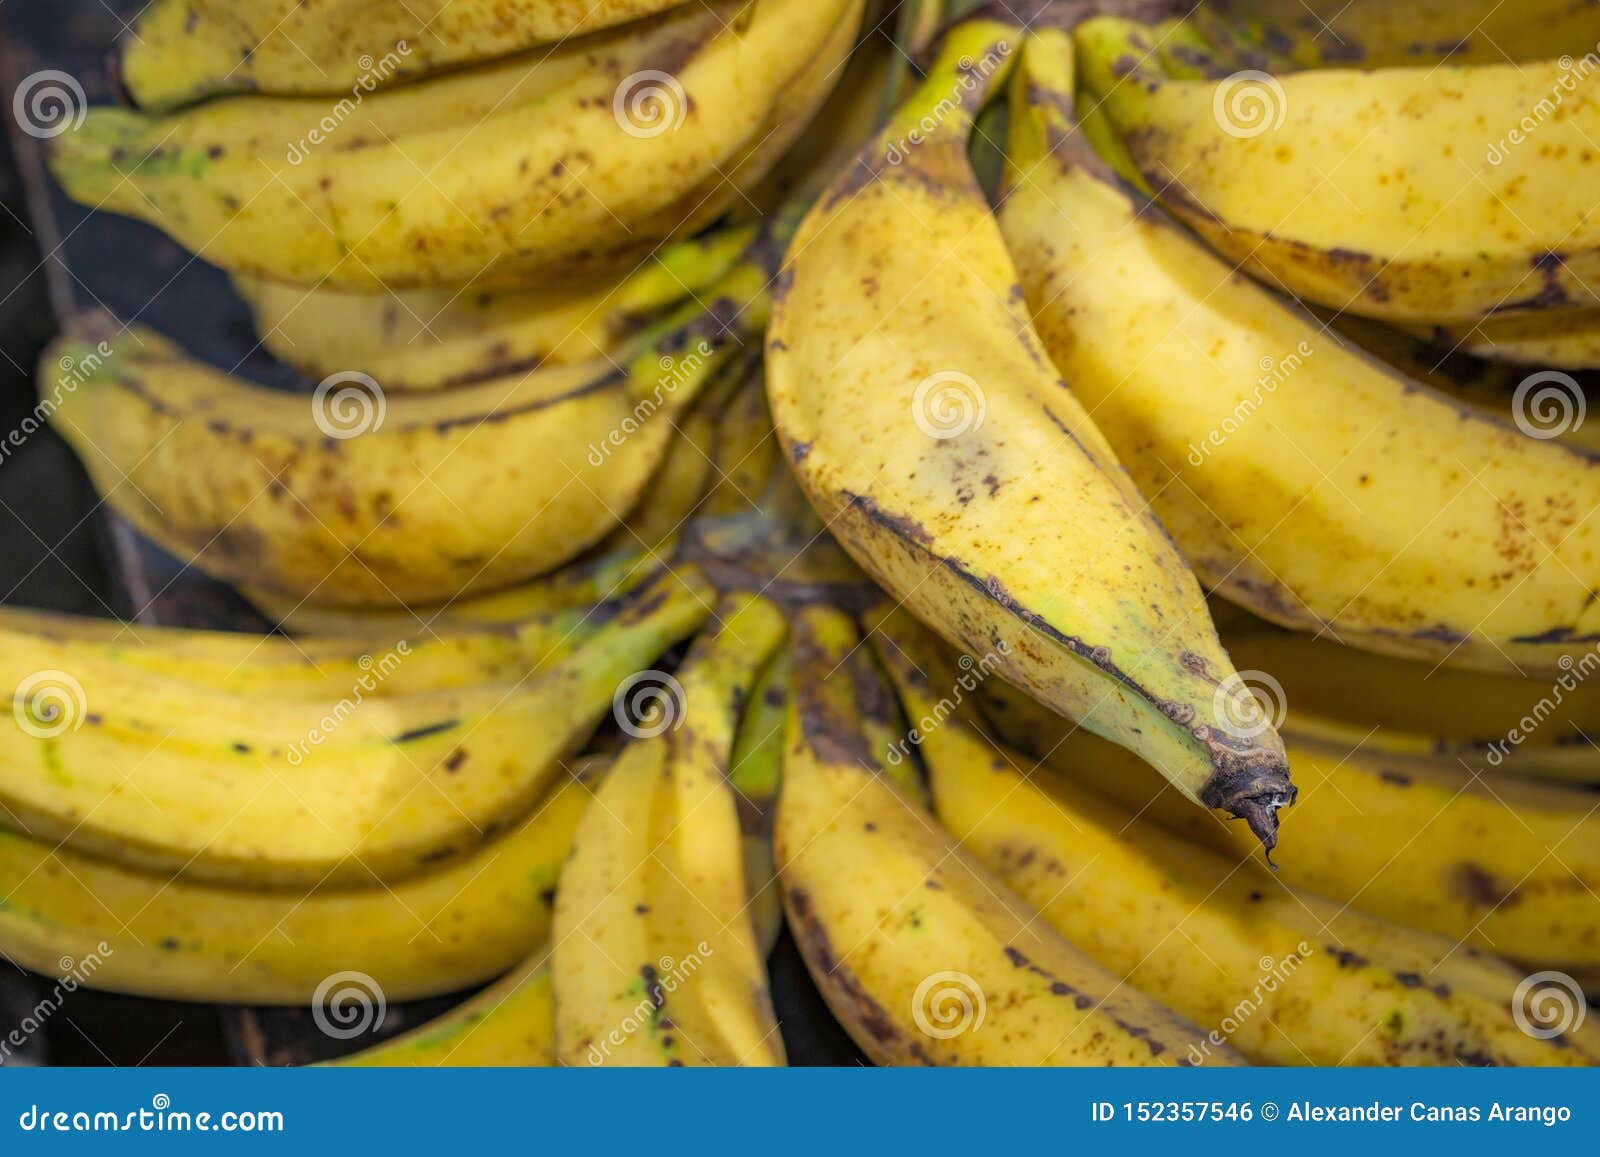 group of bananas yellow for sale